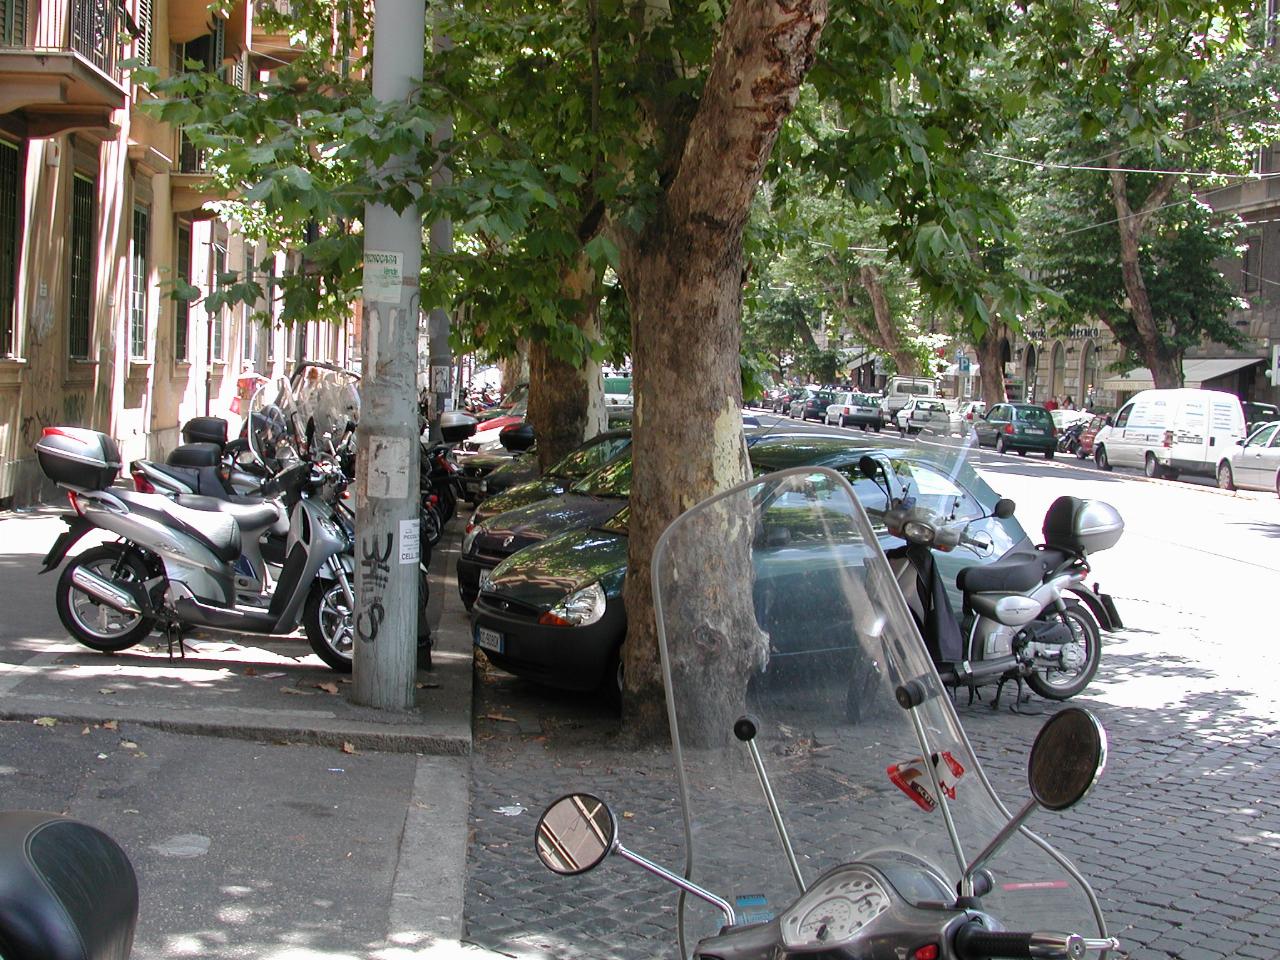 Bike parking along a major Rome street, probably Viale Regina